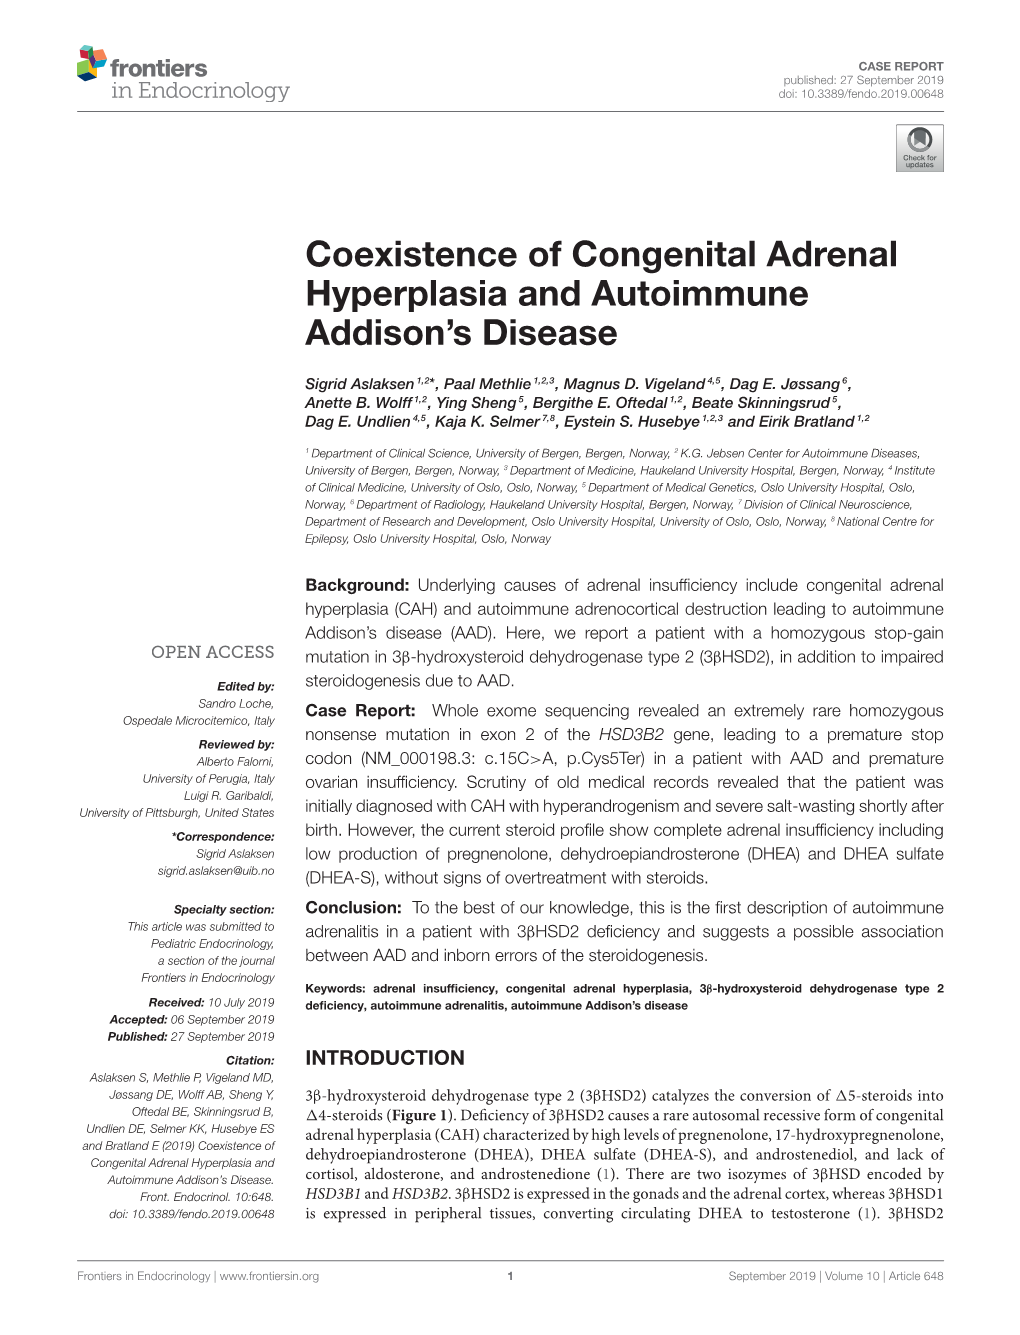 Coexistence of Congenital Adrenal Hyperplasia and Autoimmune Addison’S Disease